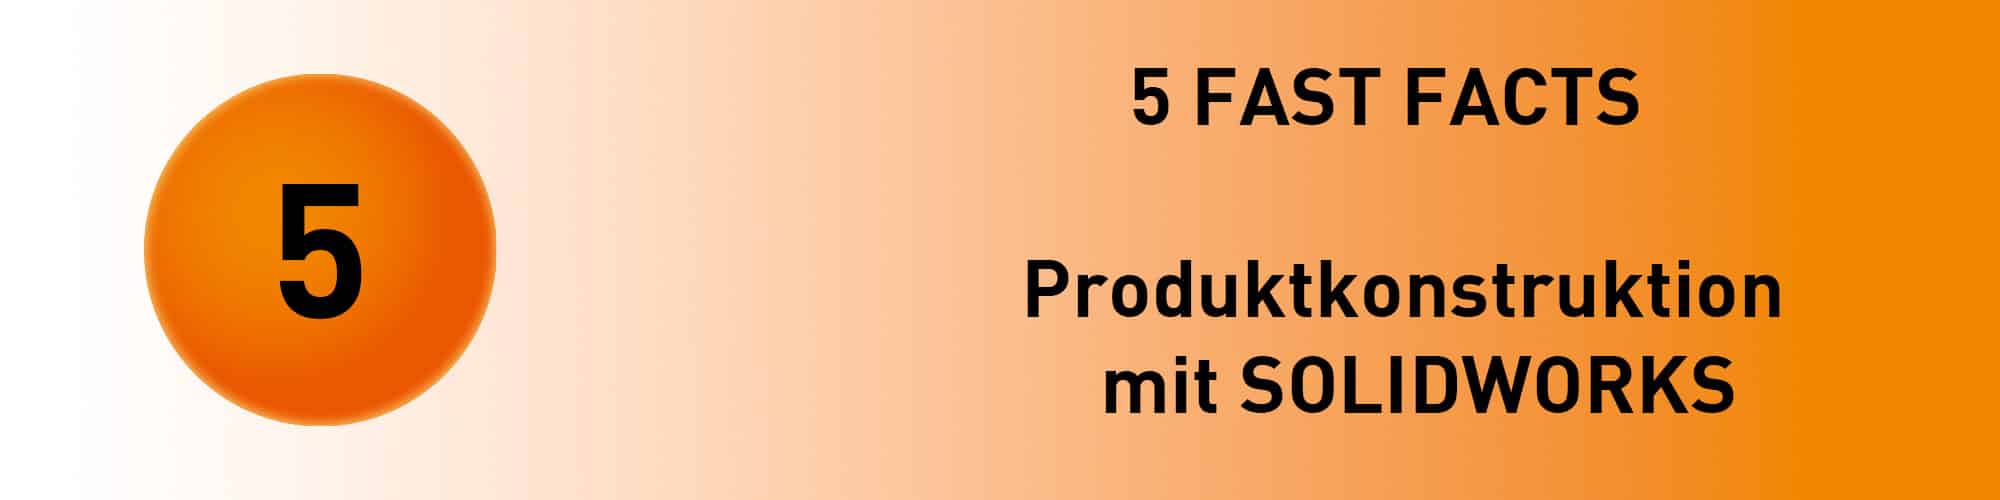 5 FAST FACTS: Produktkonstruktion mit SOLIDWORKS